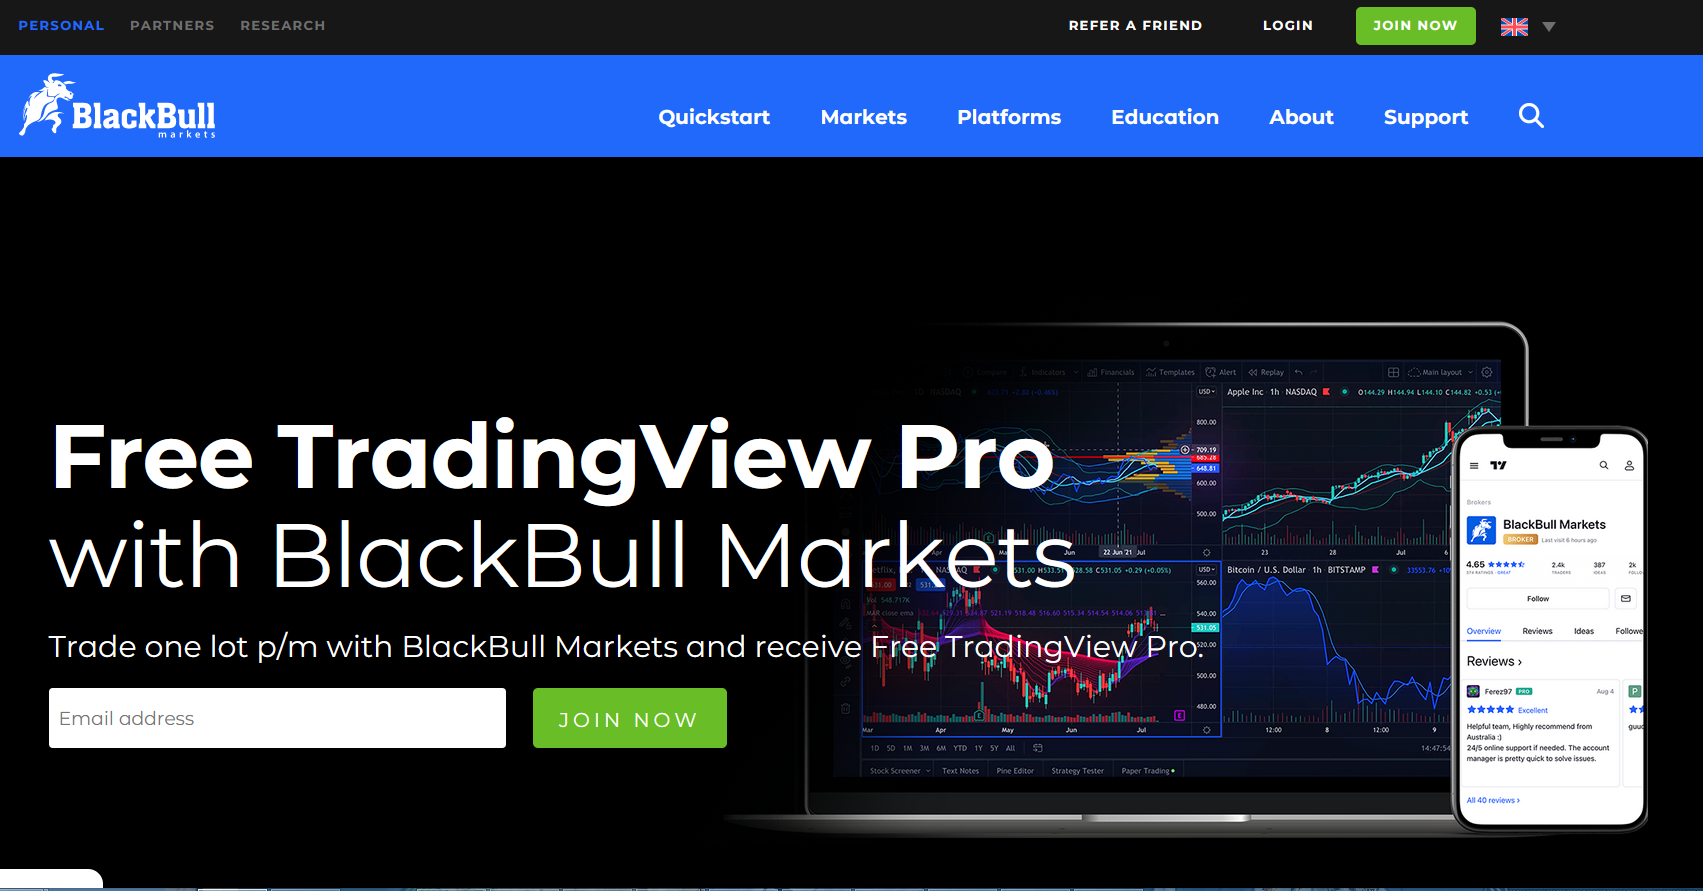 BlackBull Markets Website mit Infos zu TradingView 